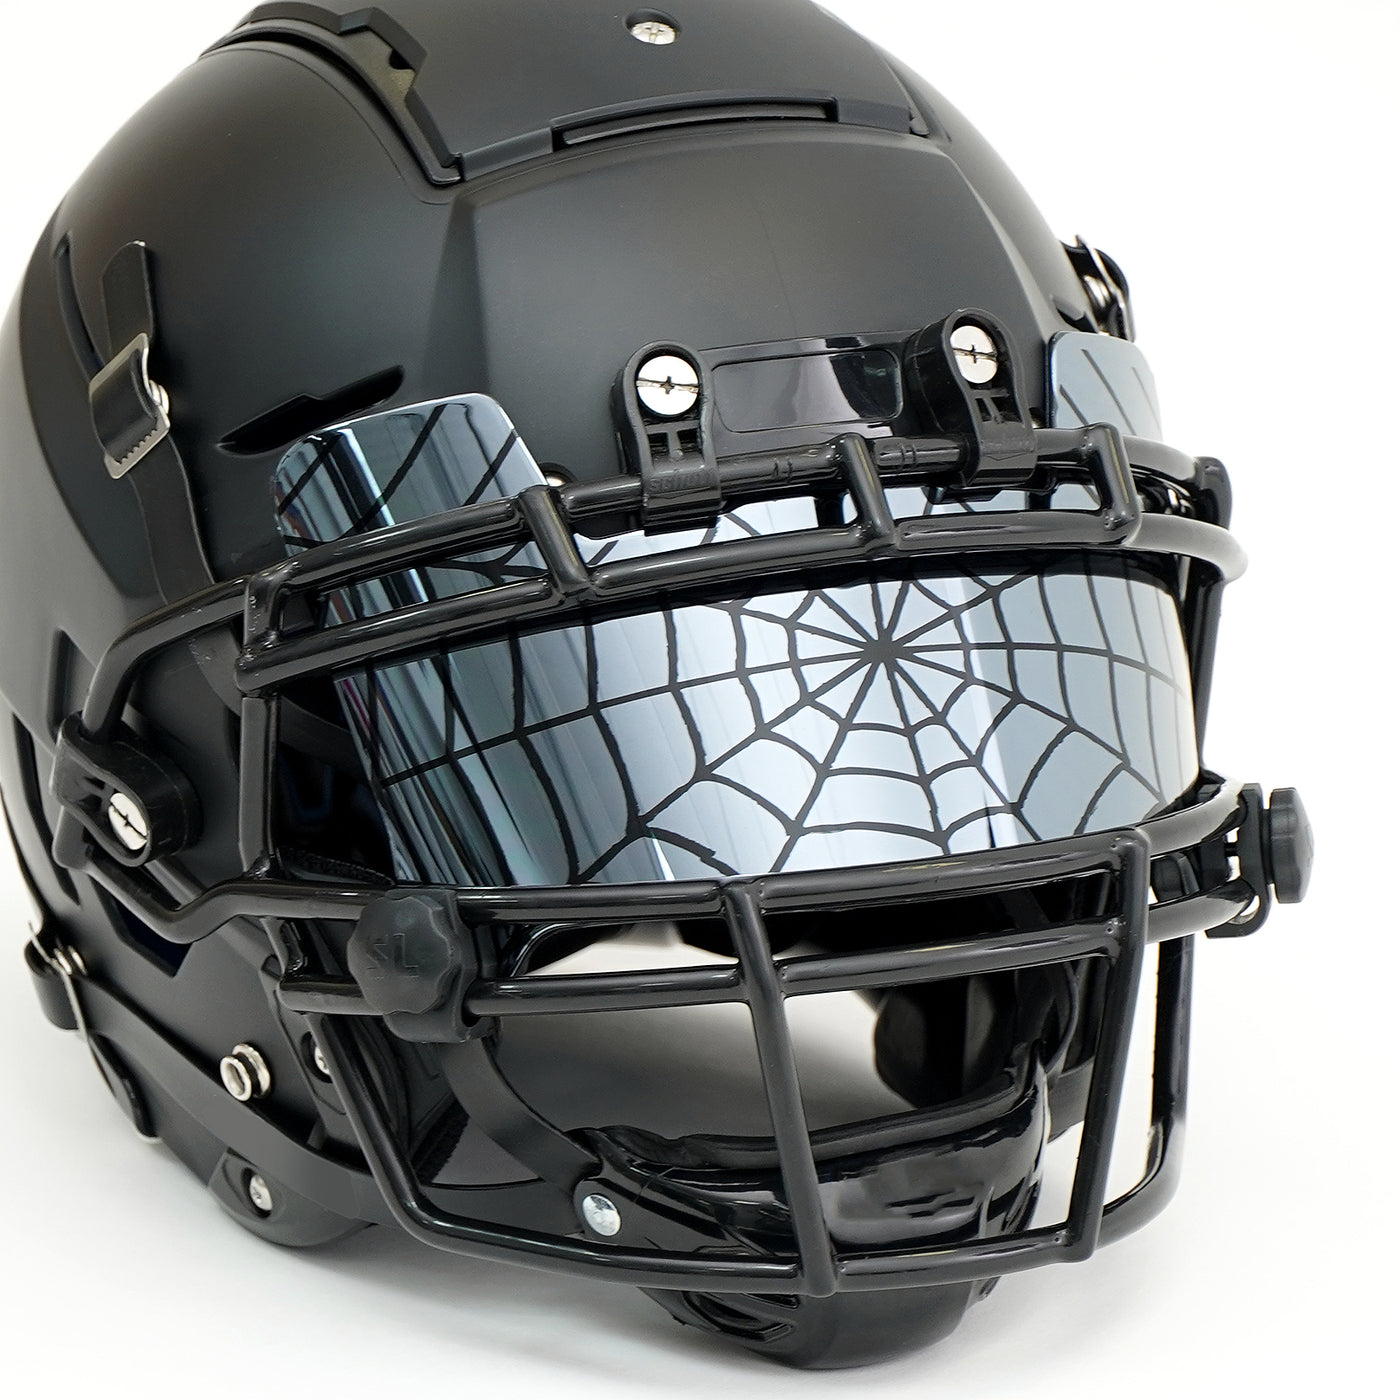 Web Silver Moonstone Helmet Eye-Shield Visor